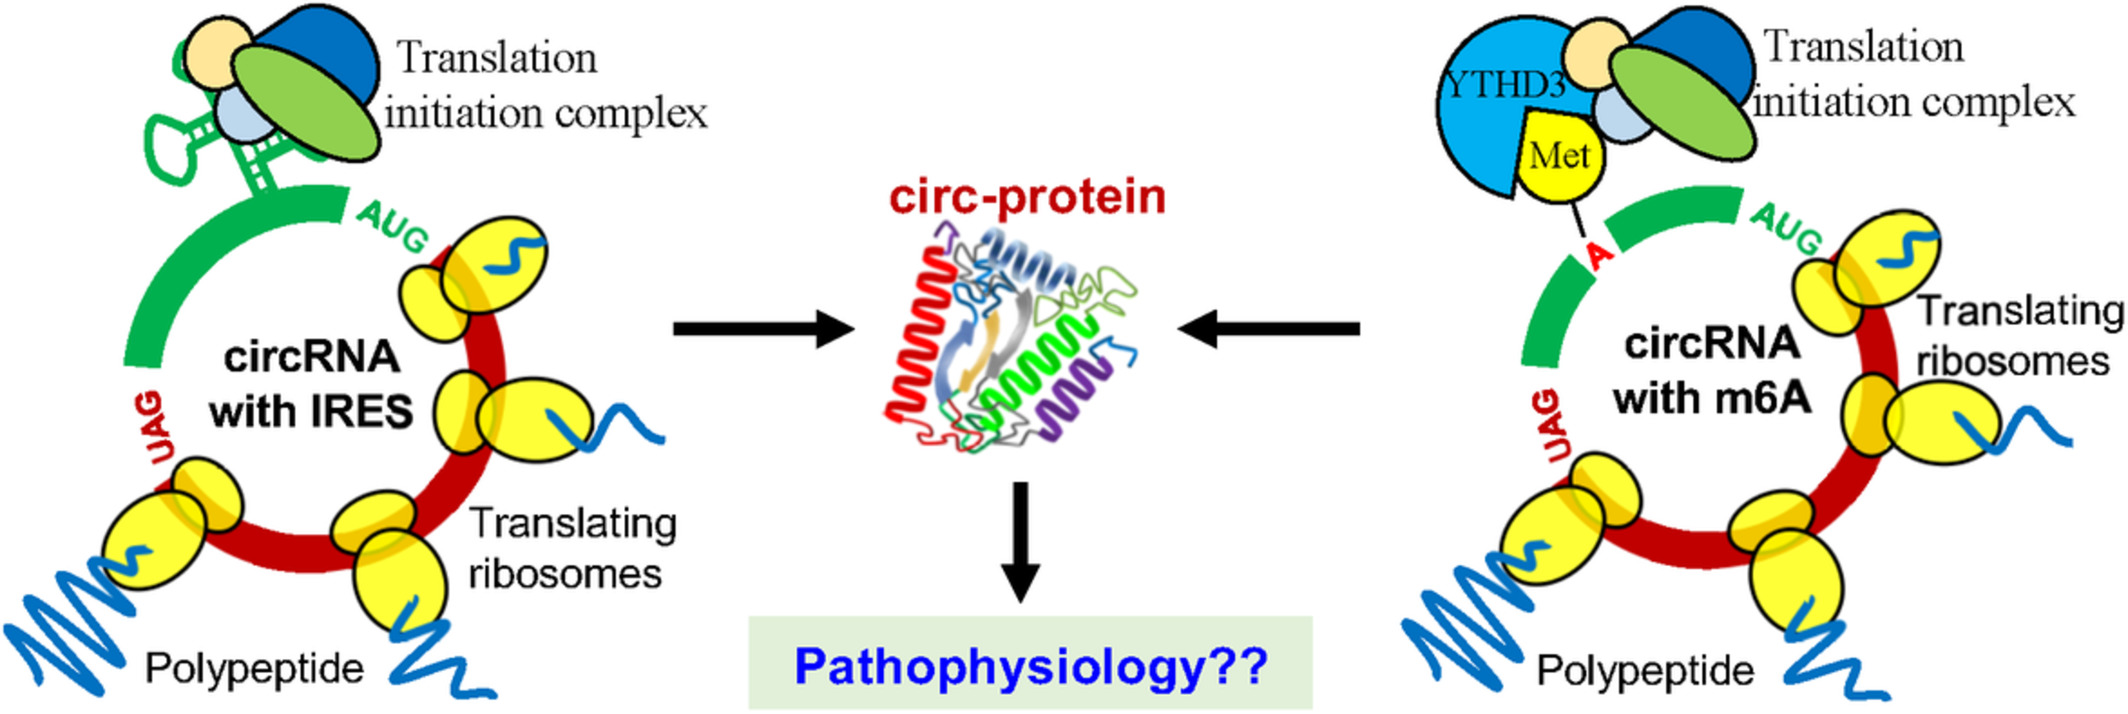 Circular RNA translation, a path to hidden proteome